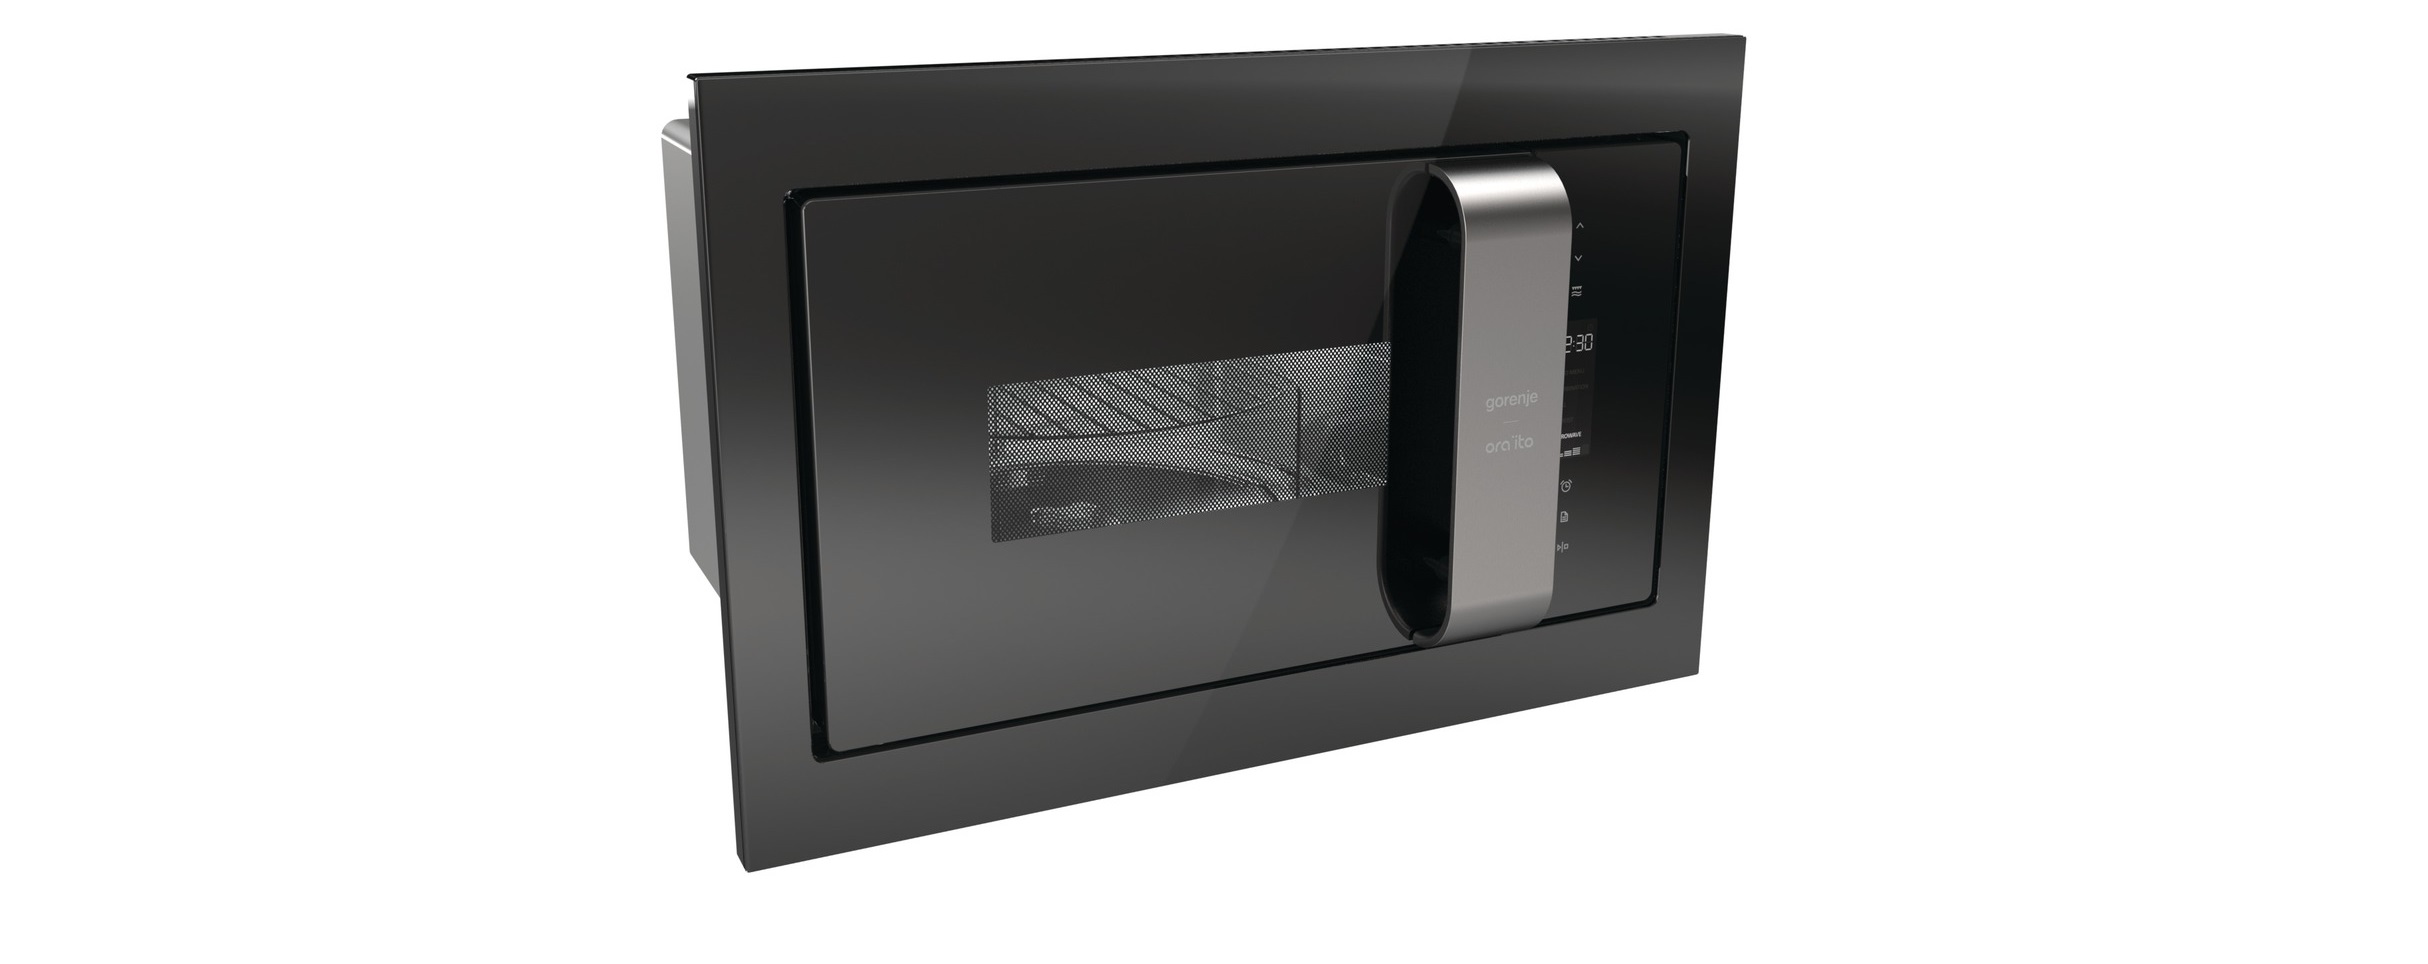 Gorenje Built-In Digital With 23 Liters, Black Electric Microwave BM235ORAB 60 Grill, - cm